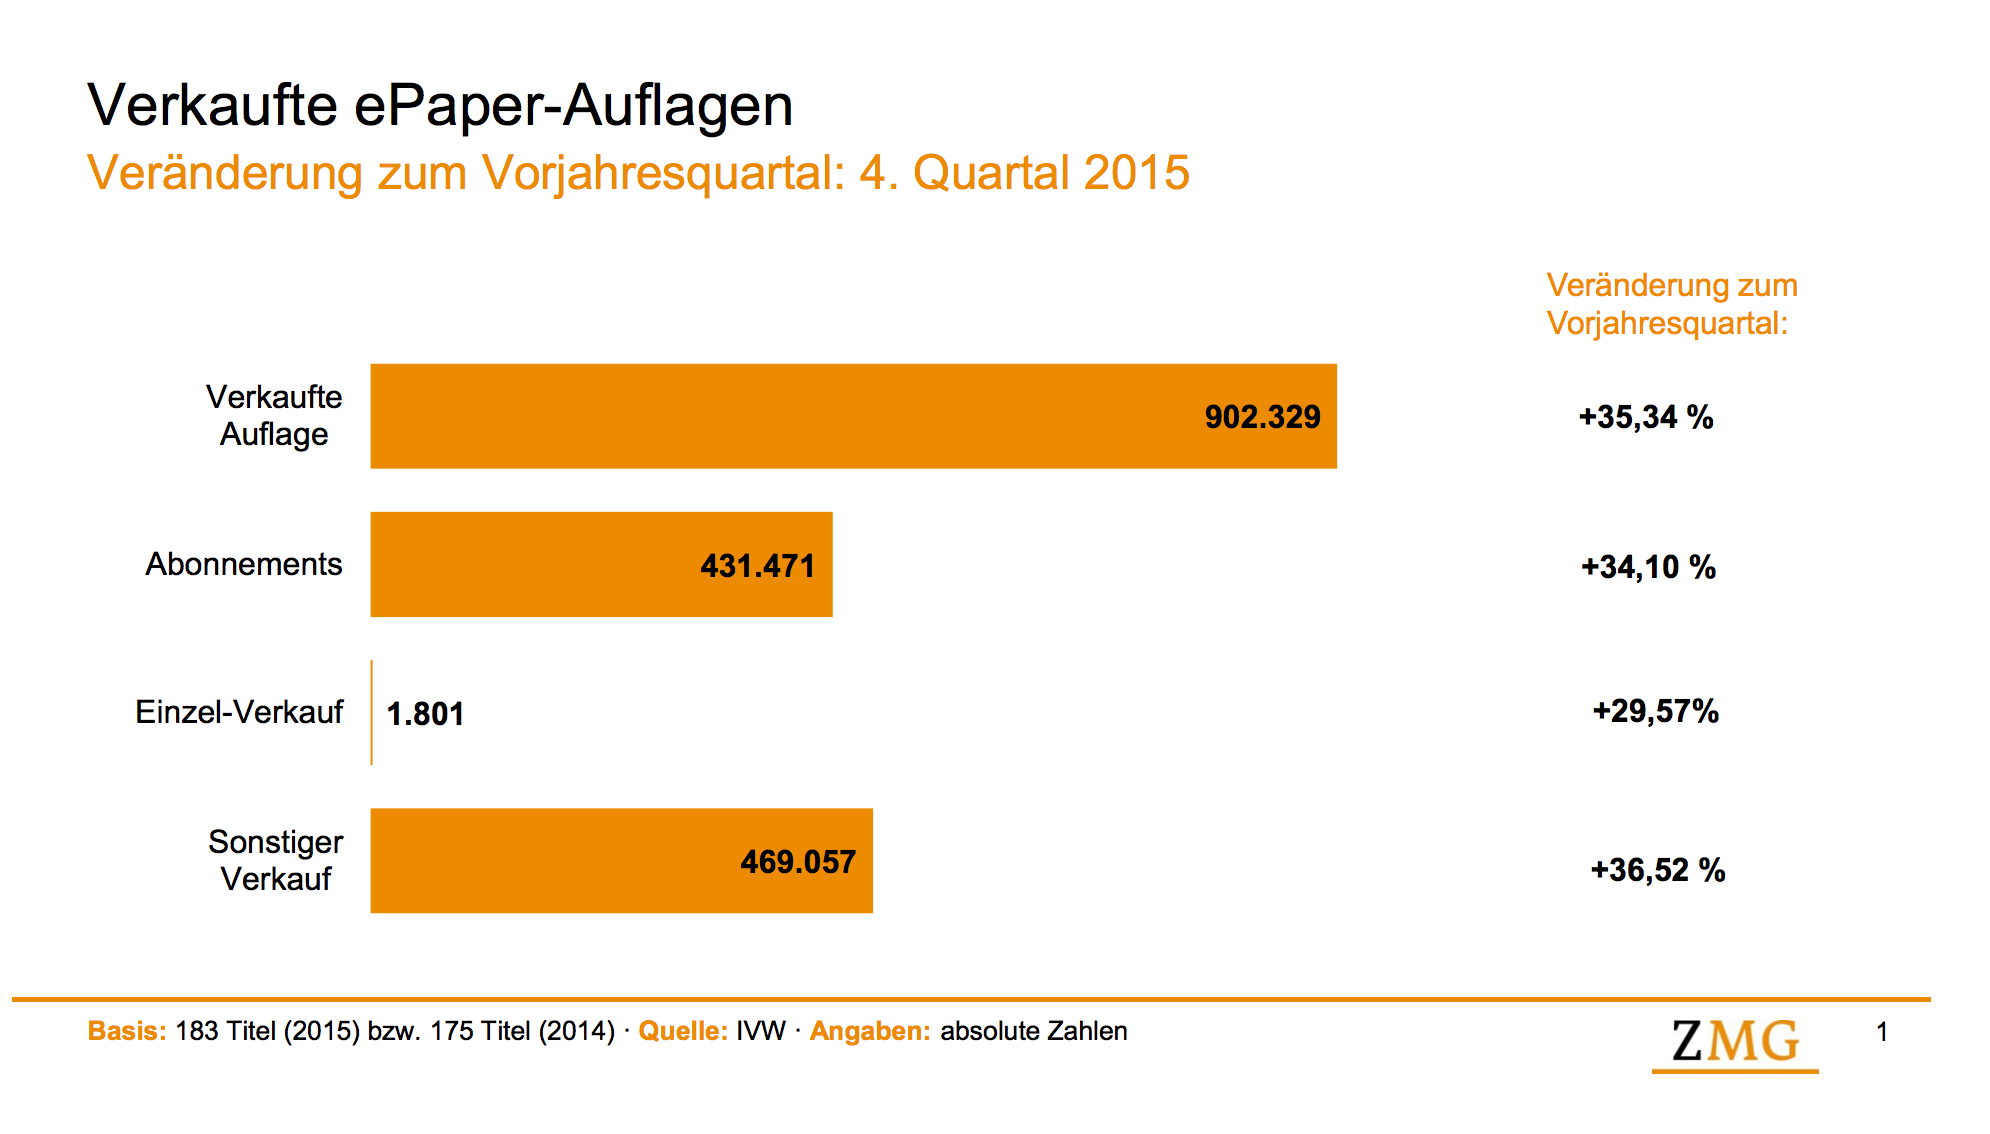 ePaper Sales Germany Q4 2015